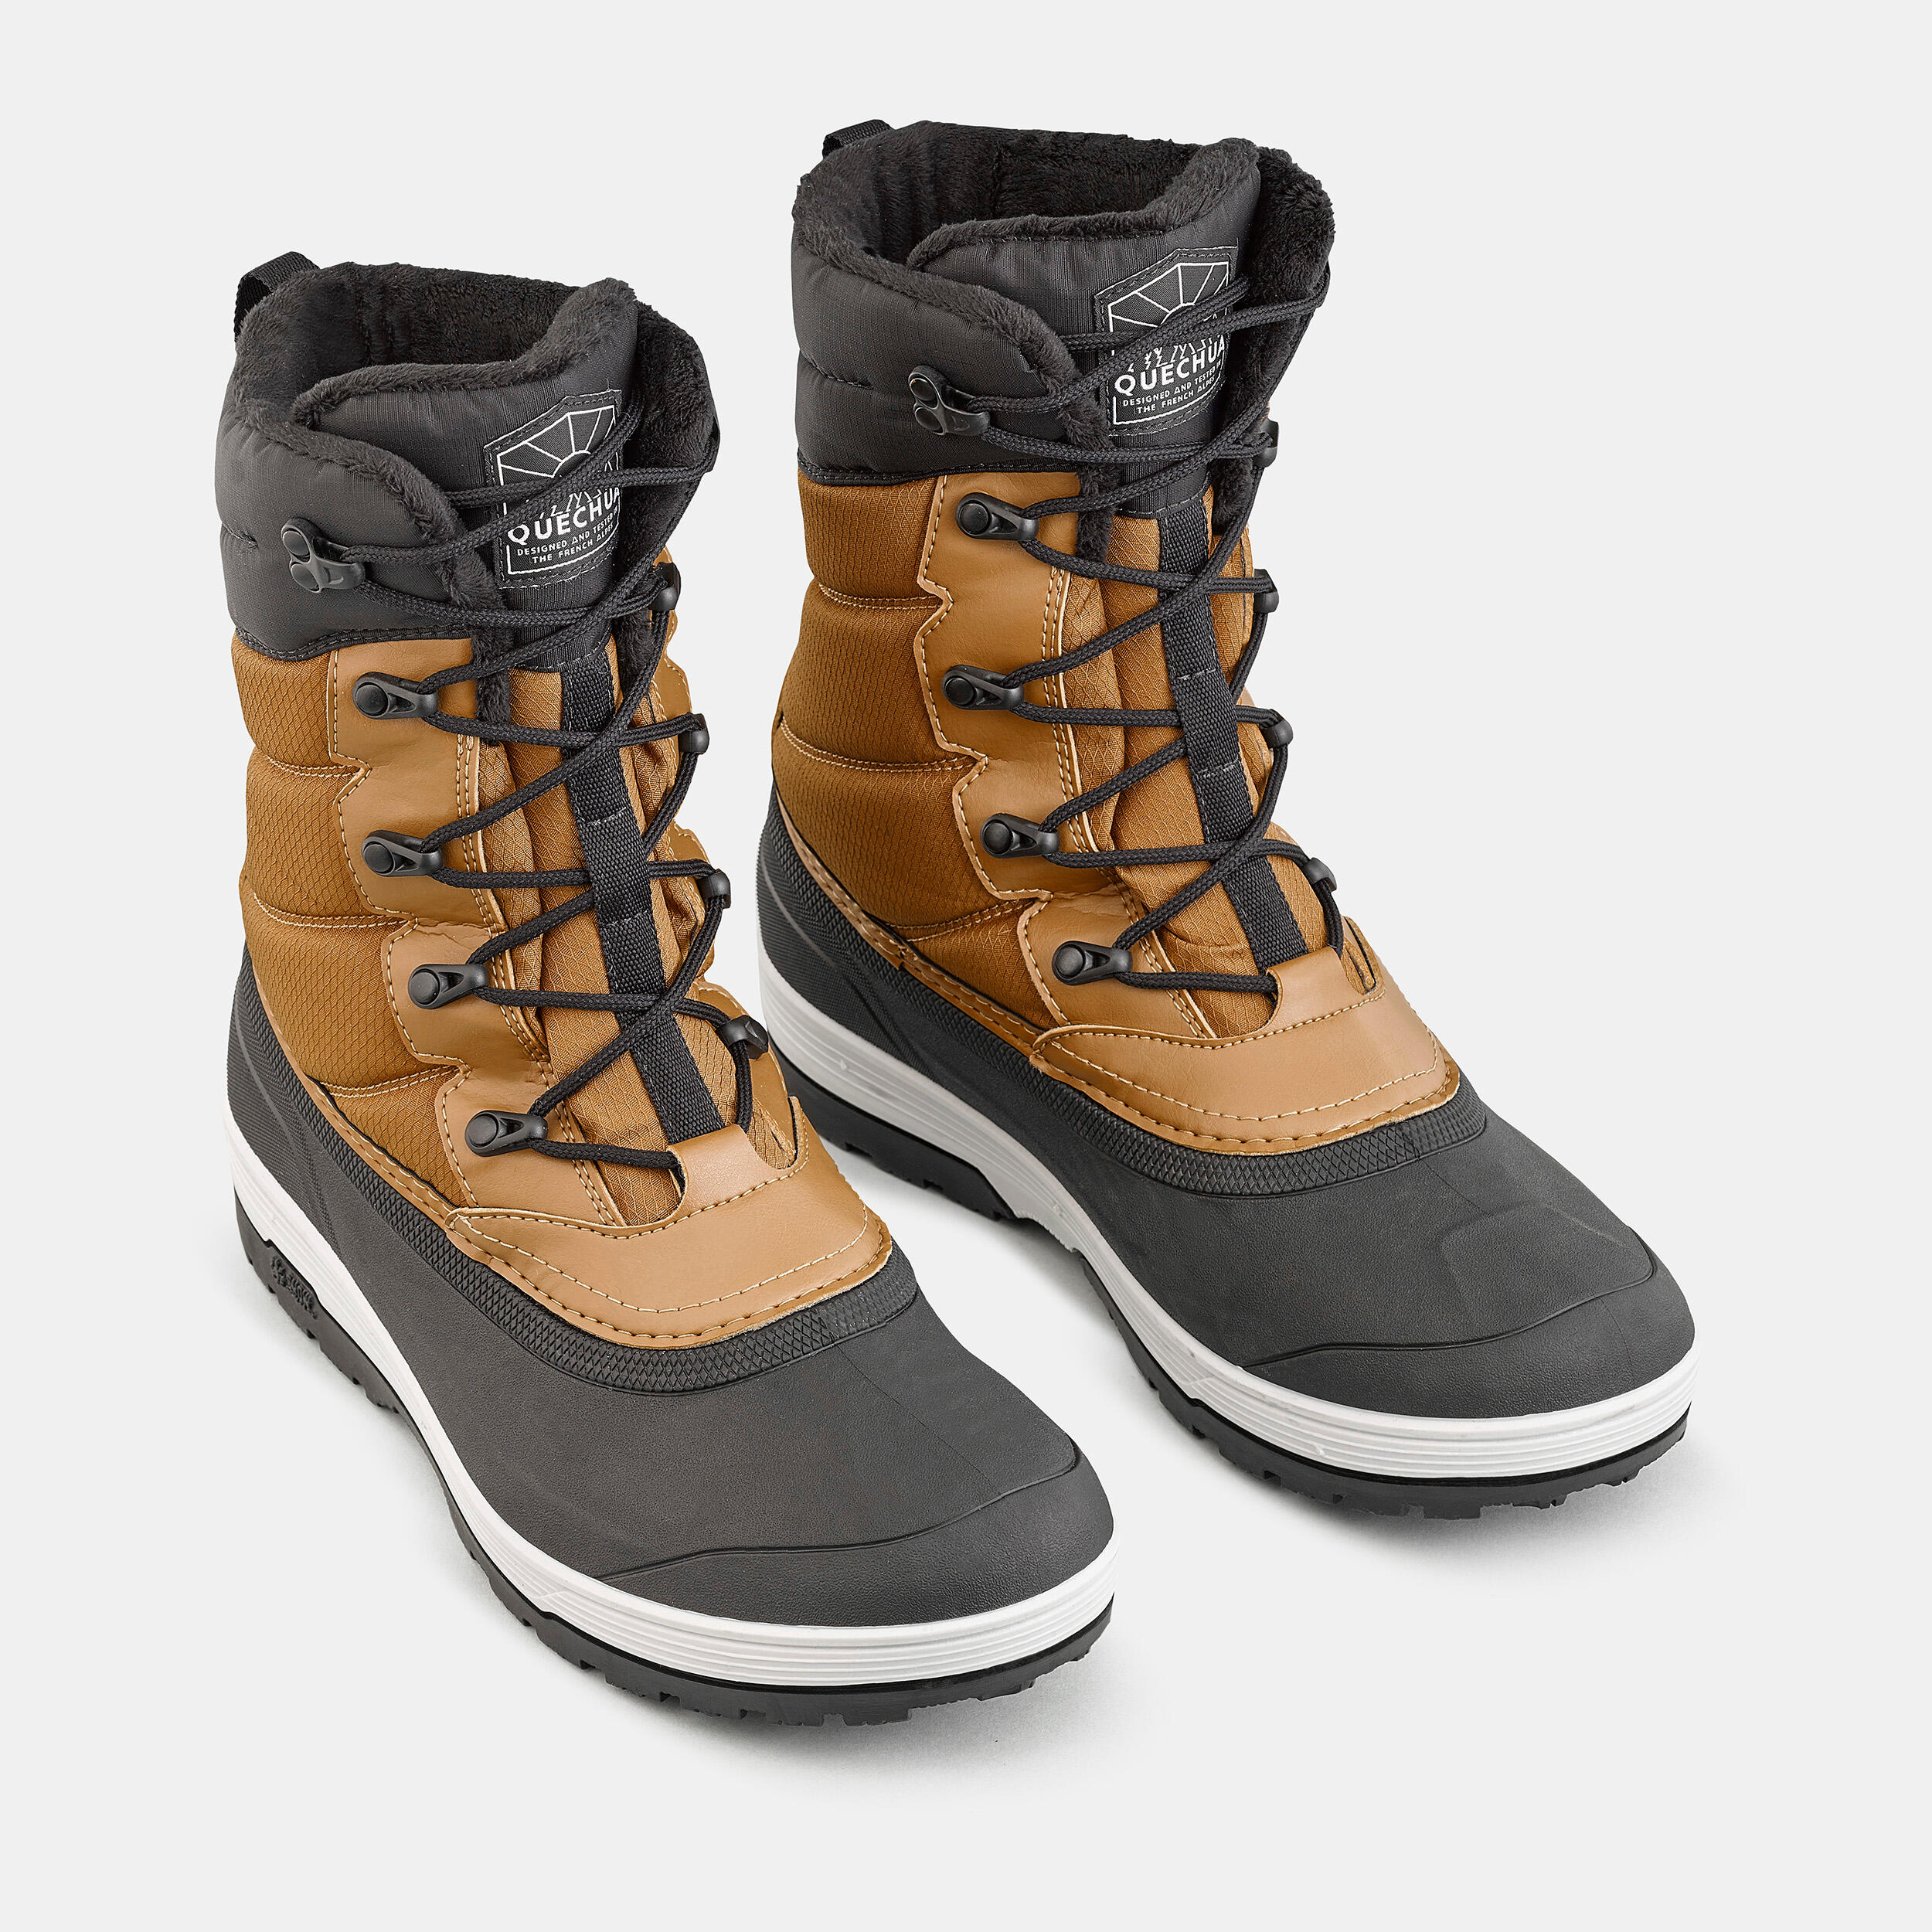 Warm Waterproof Snow Boots  - SH500 lace-up -  Men’s 4/9